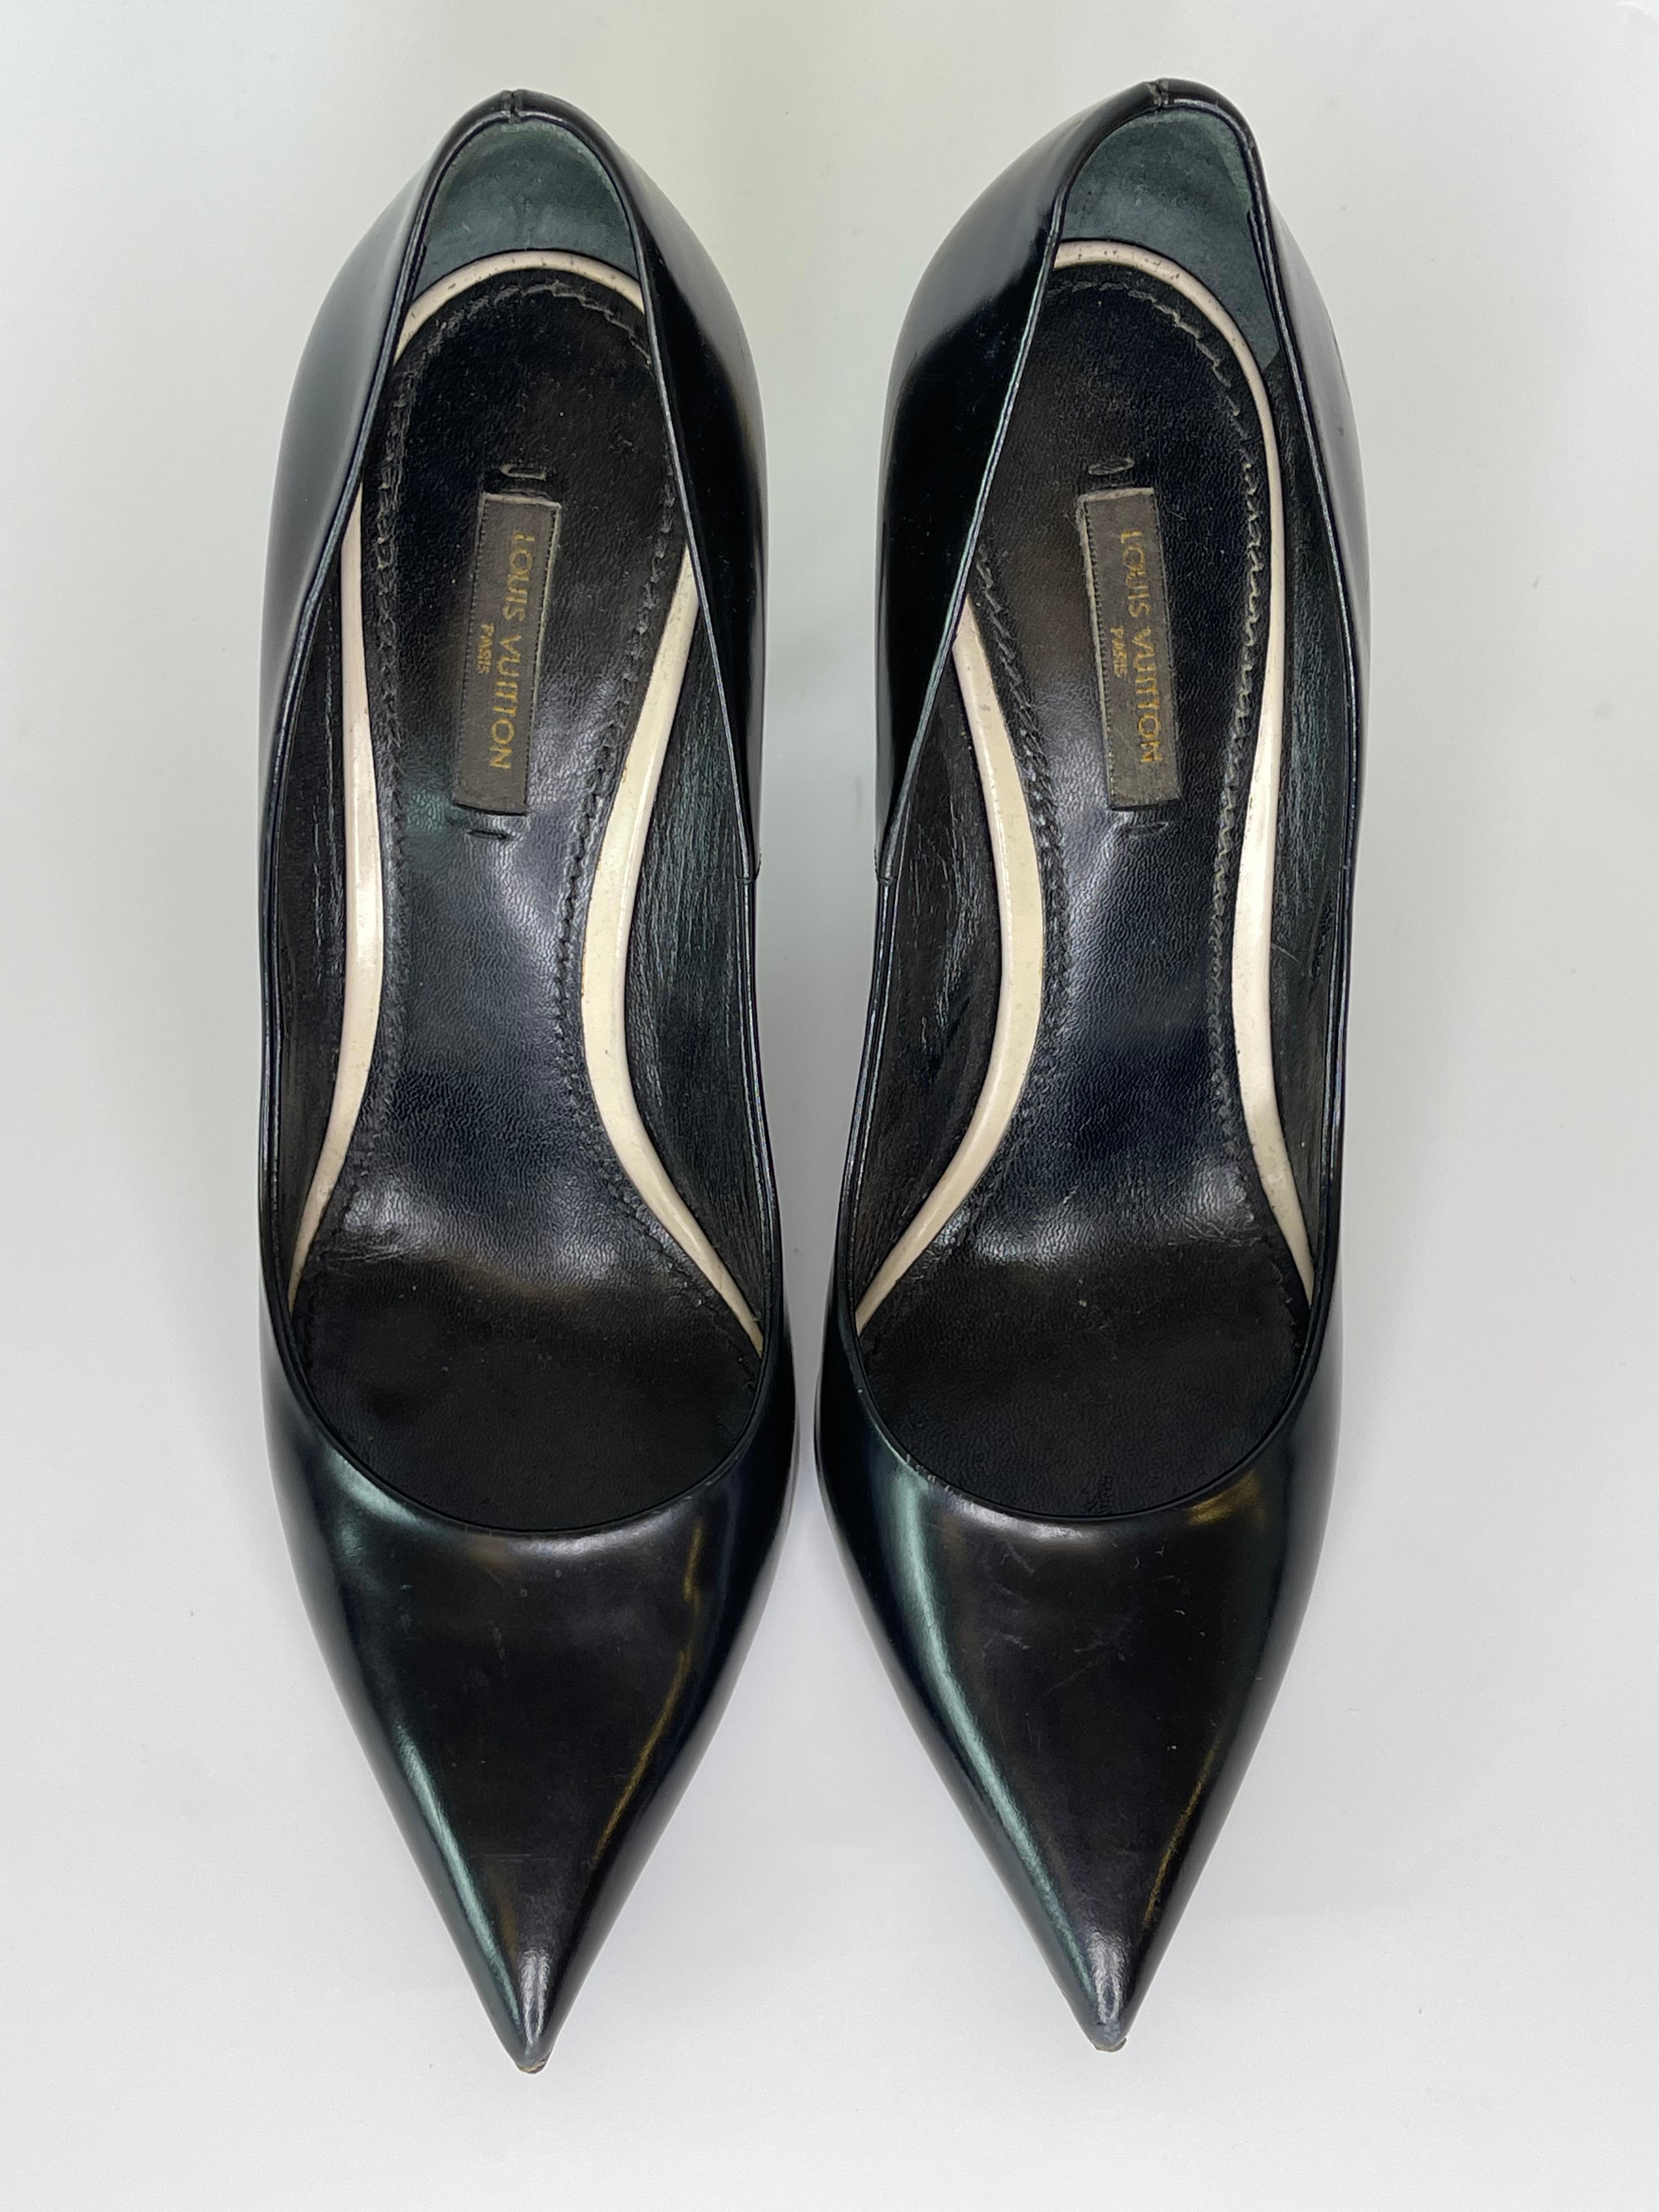 louis vuitton patent leather heels